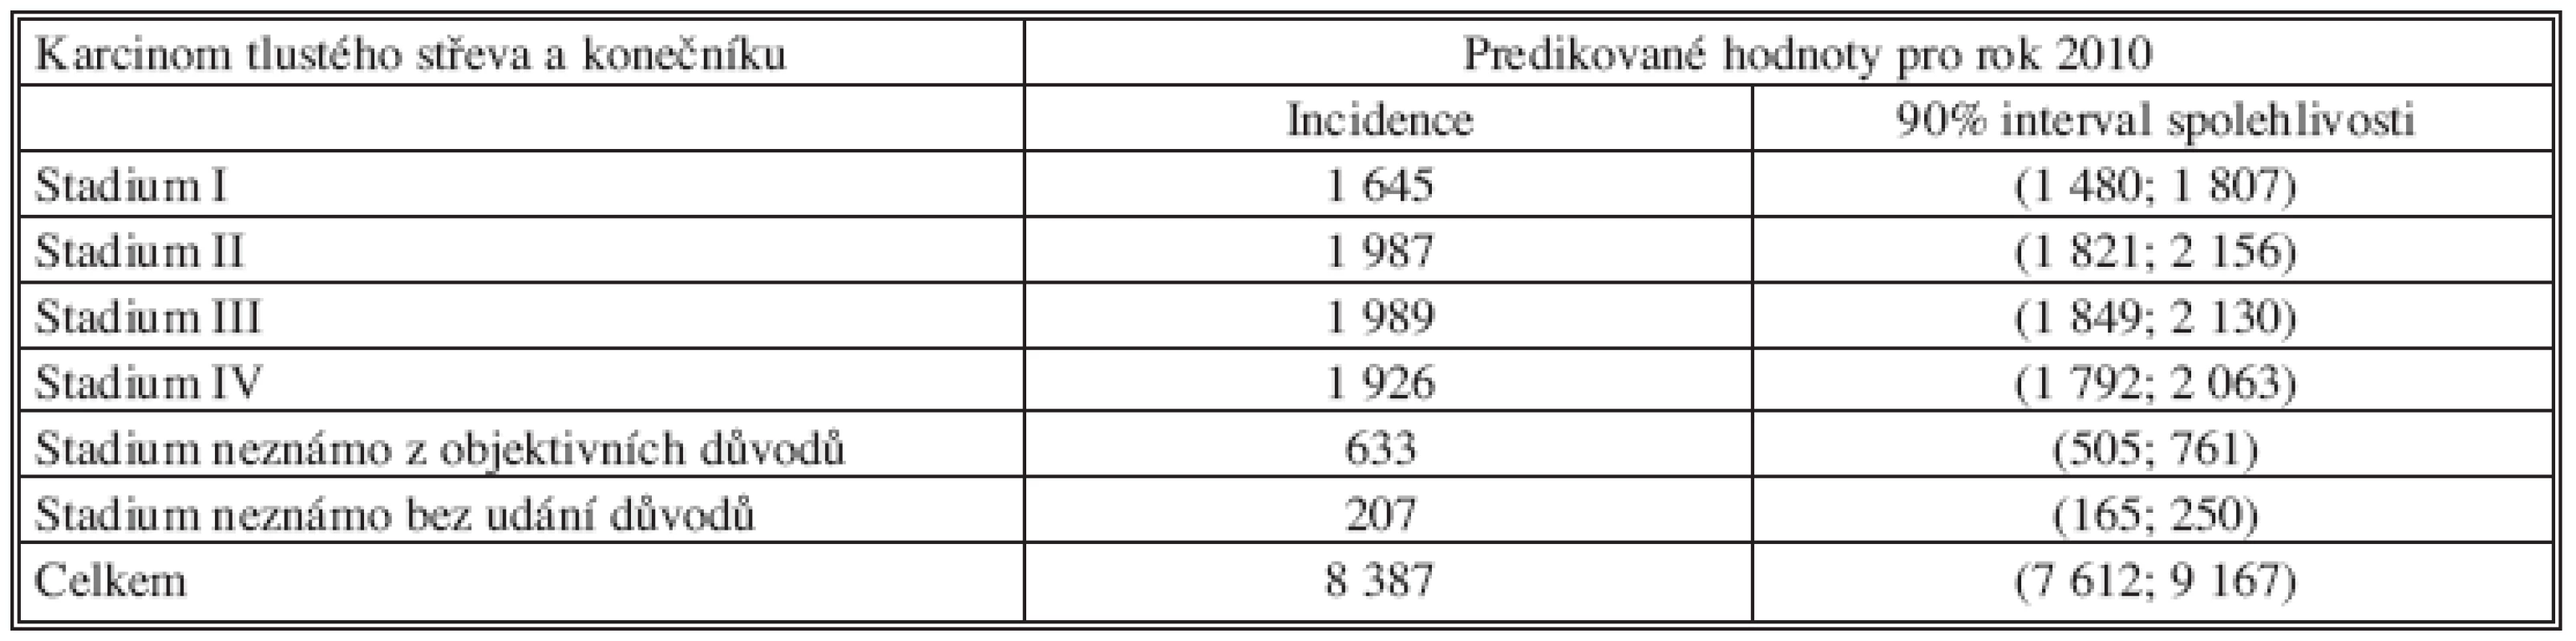 Odhad incidence KRK v České republice pro rok 2010 [2]